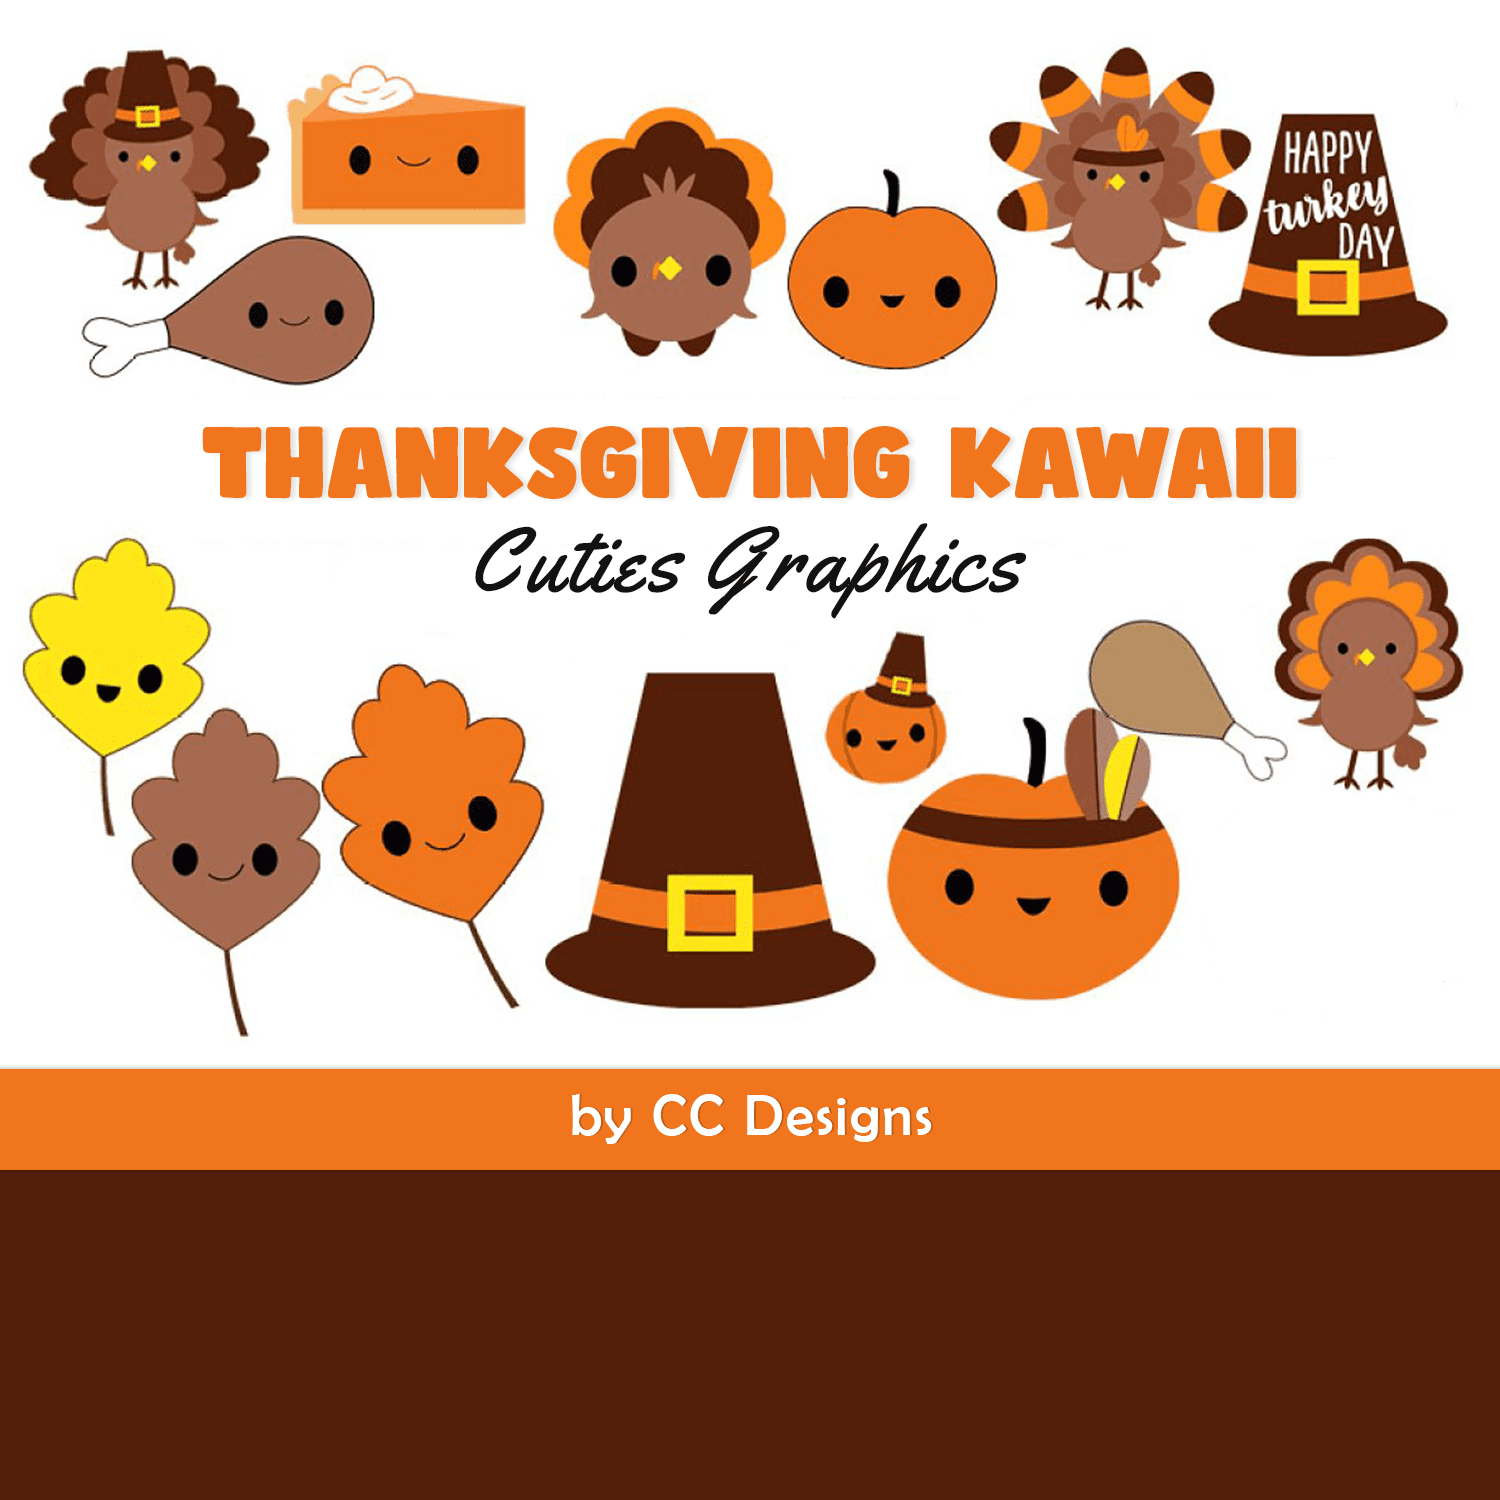 Thanksgiving Kawaii Cuties Graphics.